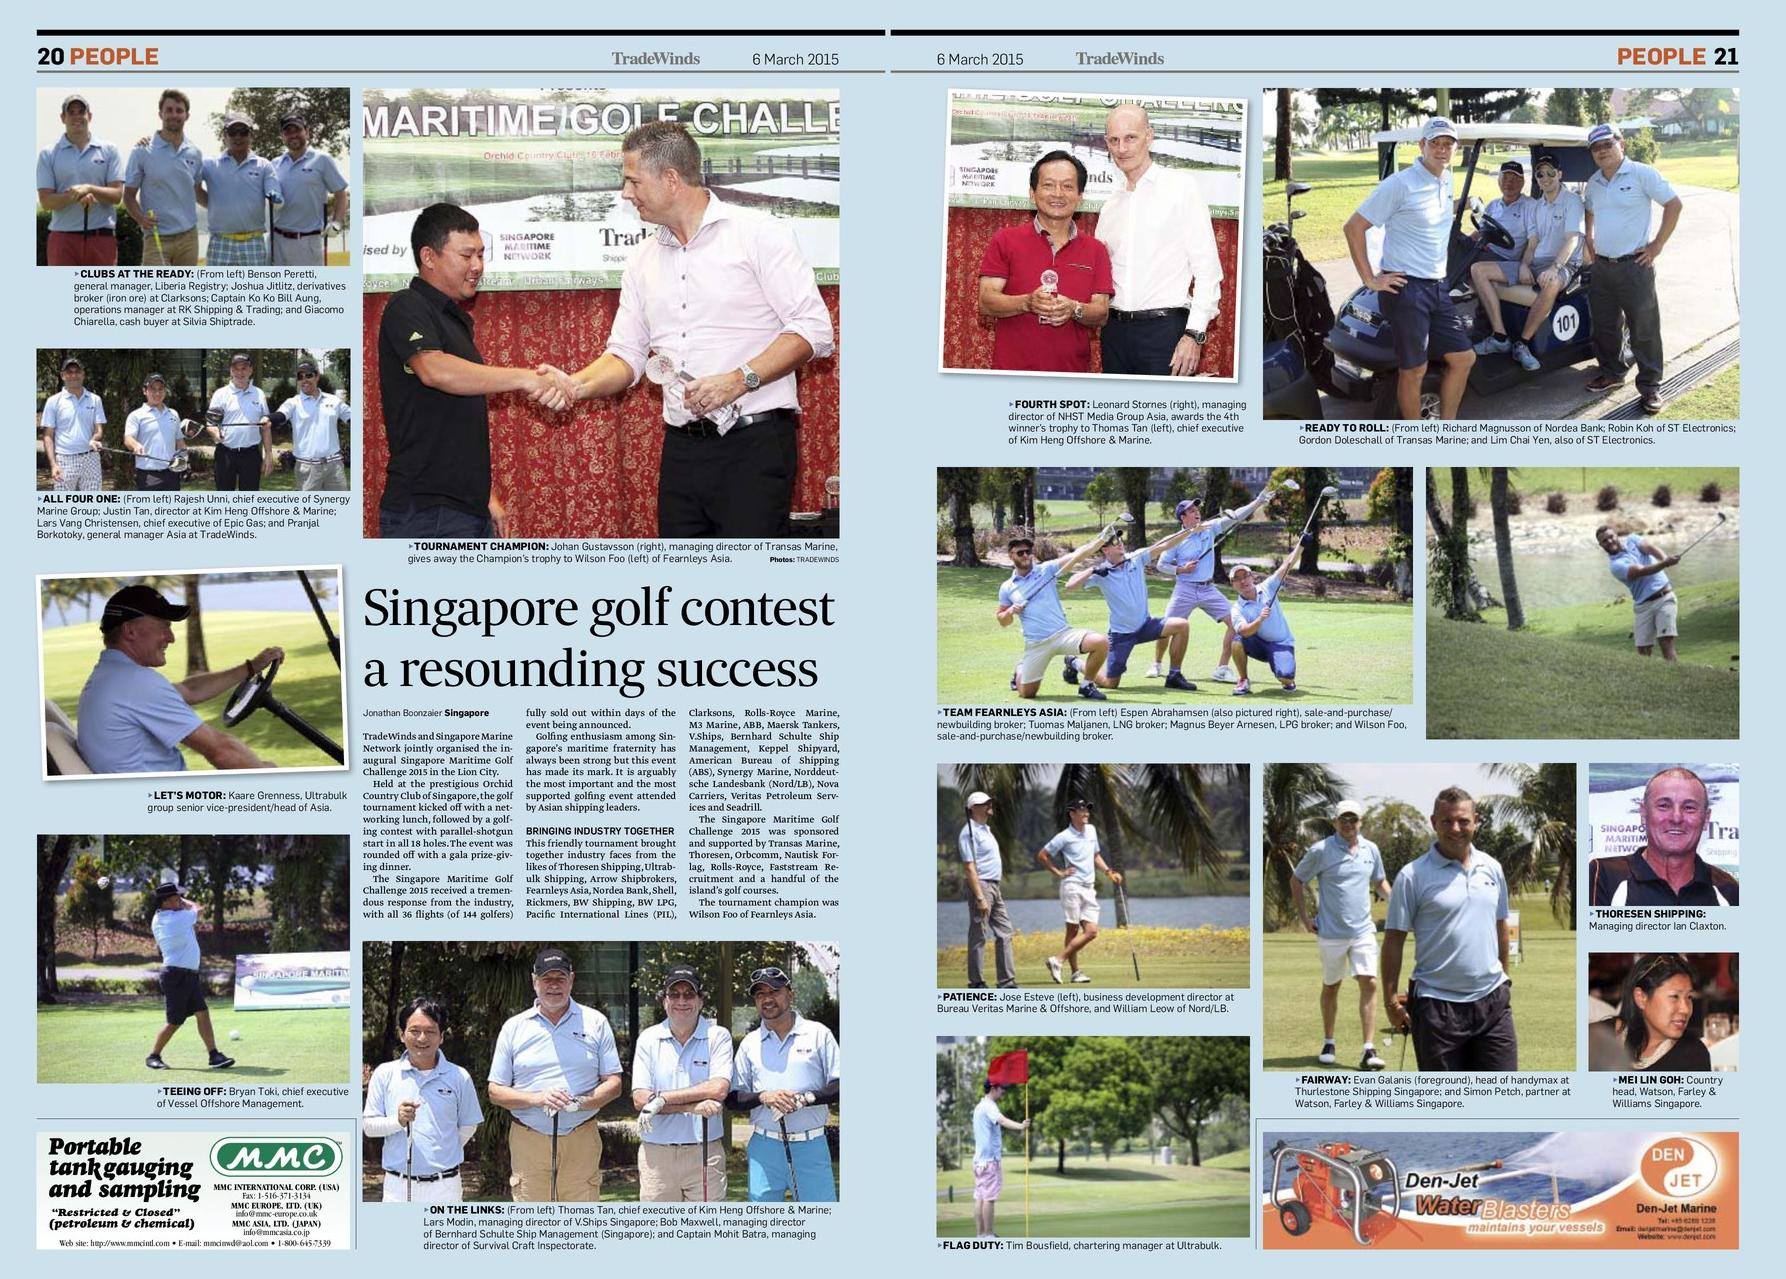 Singapore Maritime Golf - A resounding success